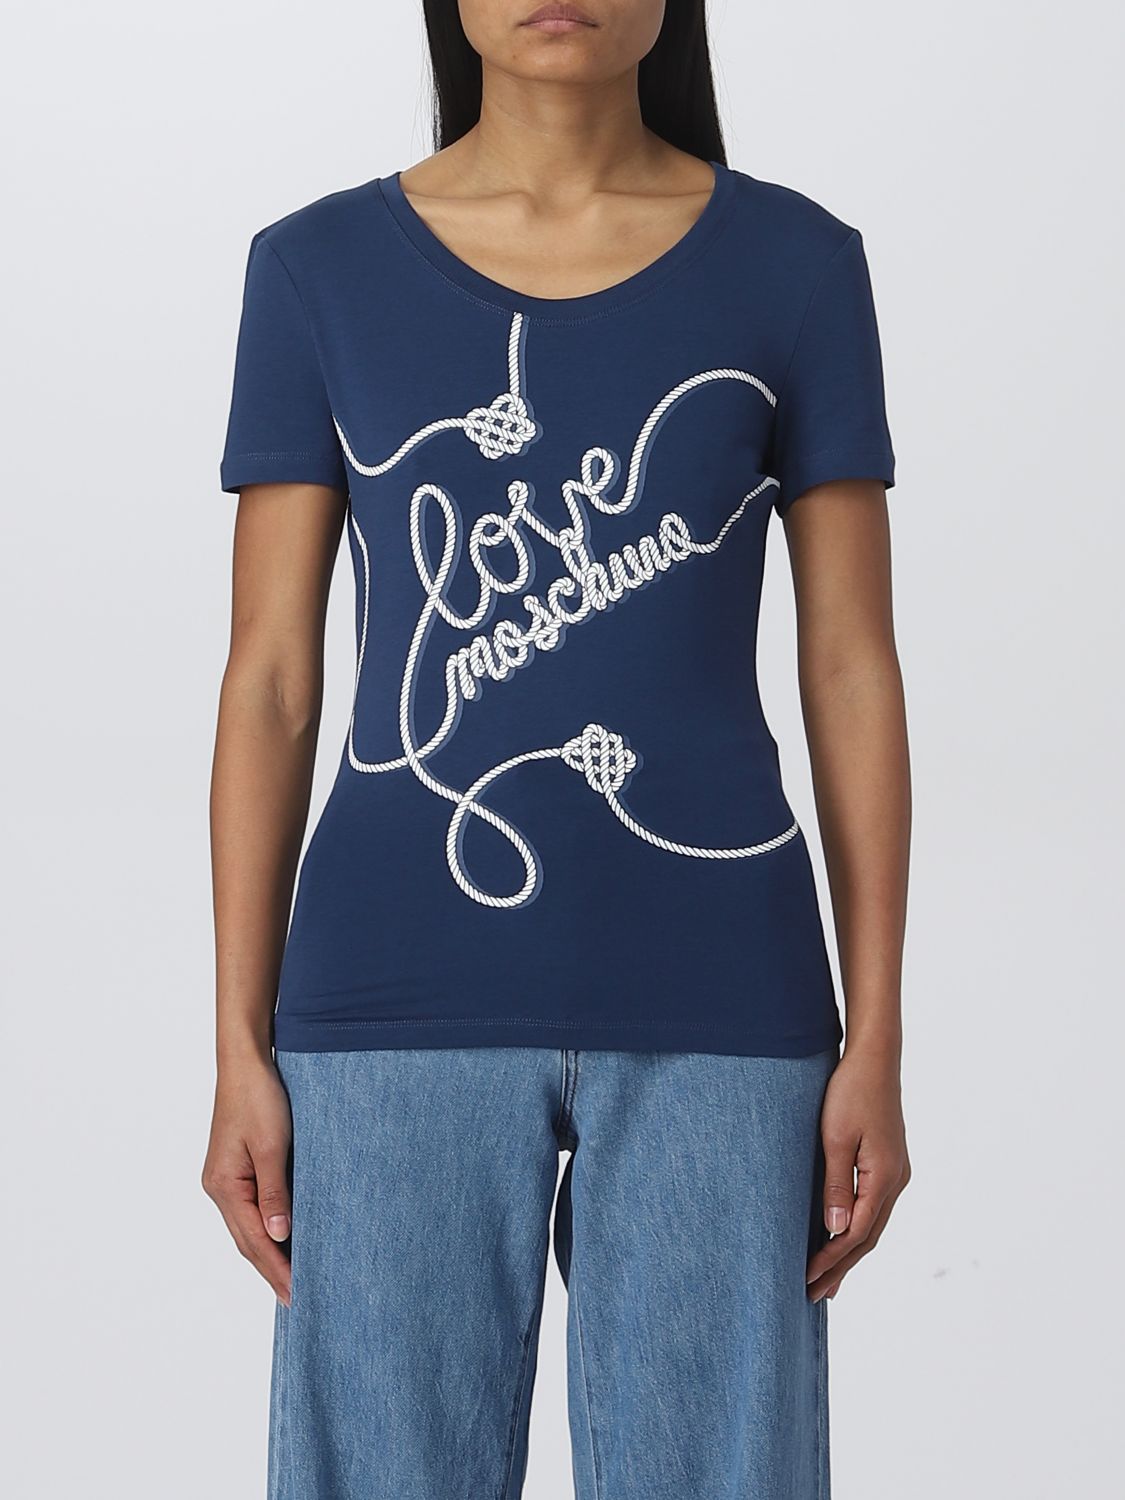 LOVE MOSCHINO: Camiseta para mujer, Azul | Love Moschino W4H1939E1951 línea en GIGLIO.COM